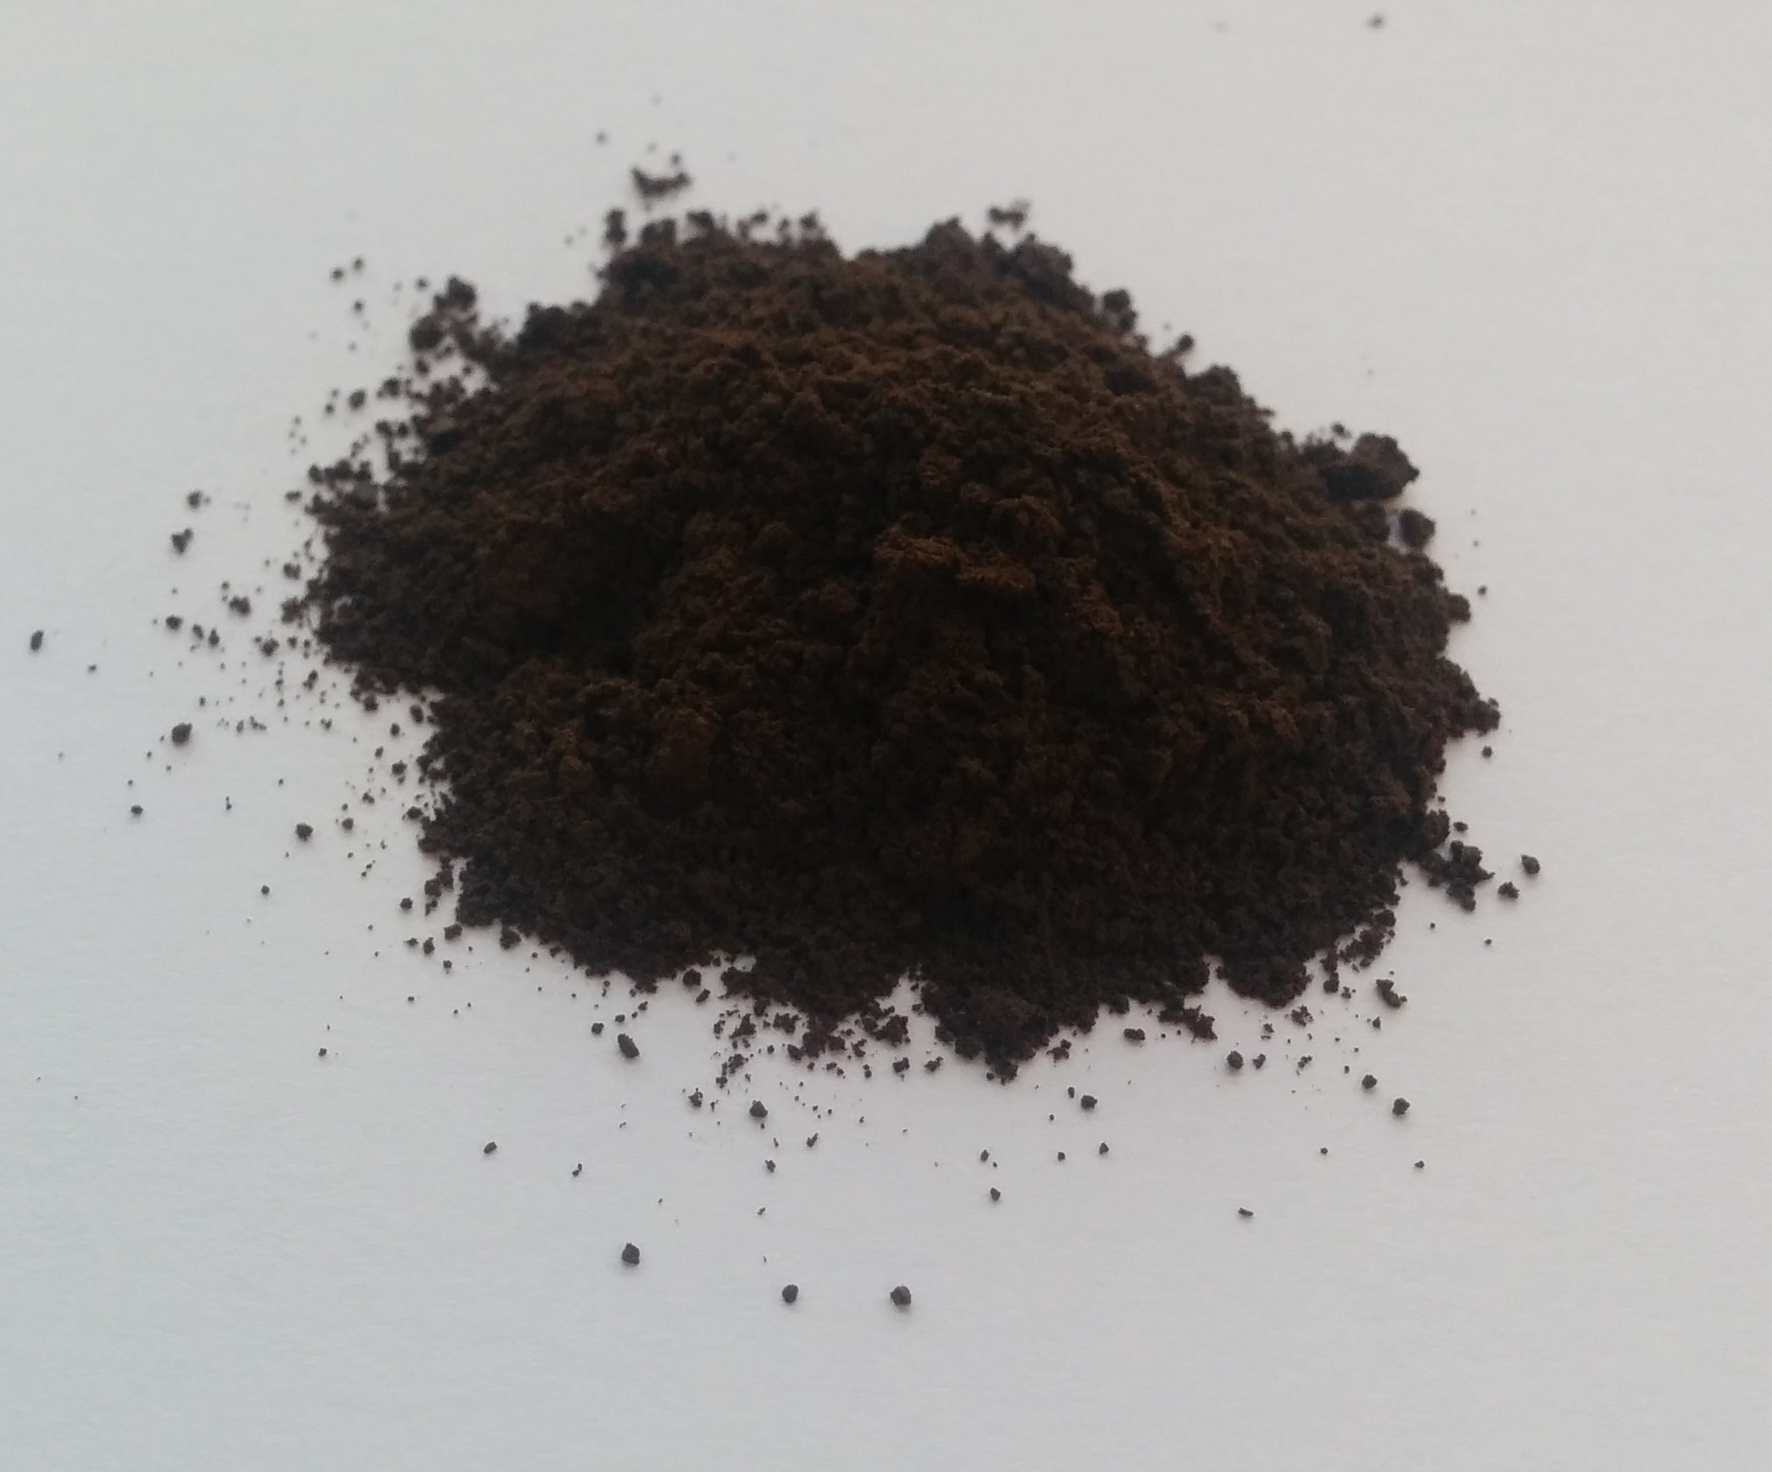 A pile of lignin powder - the "concrete of plant cells".